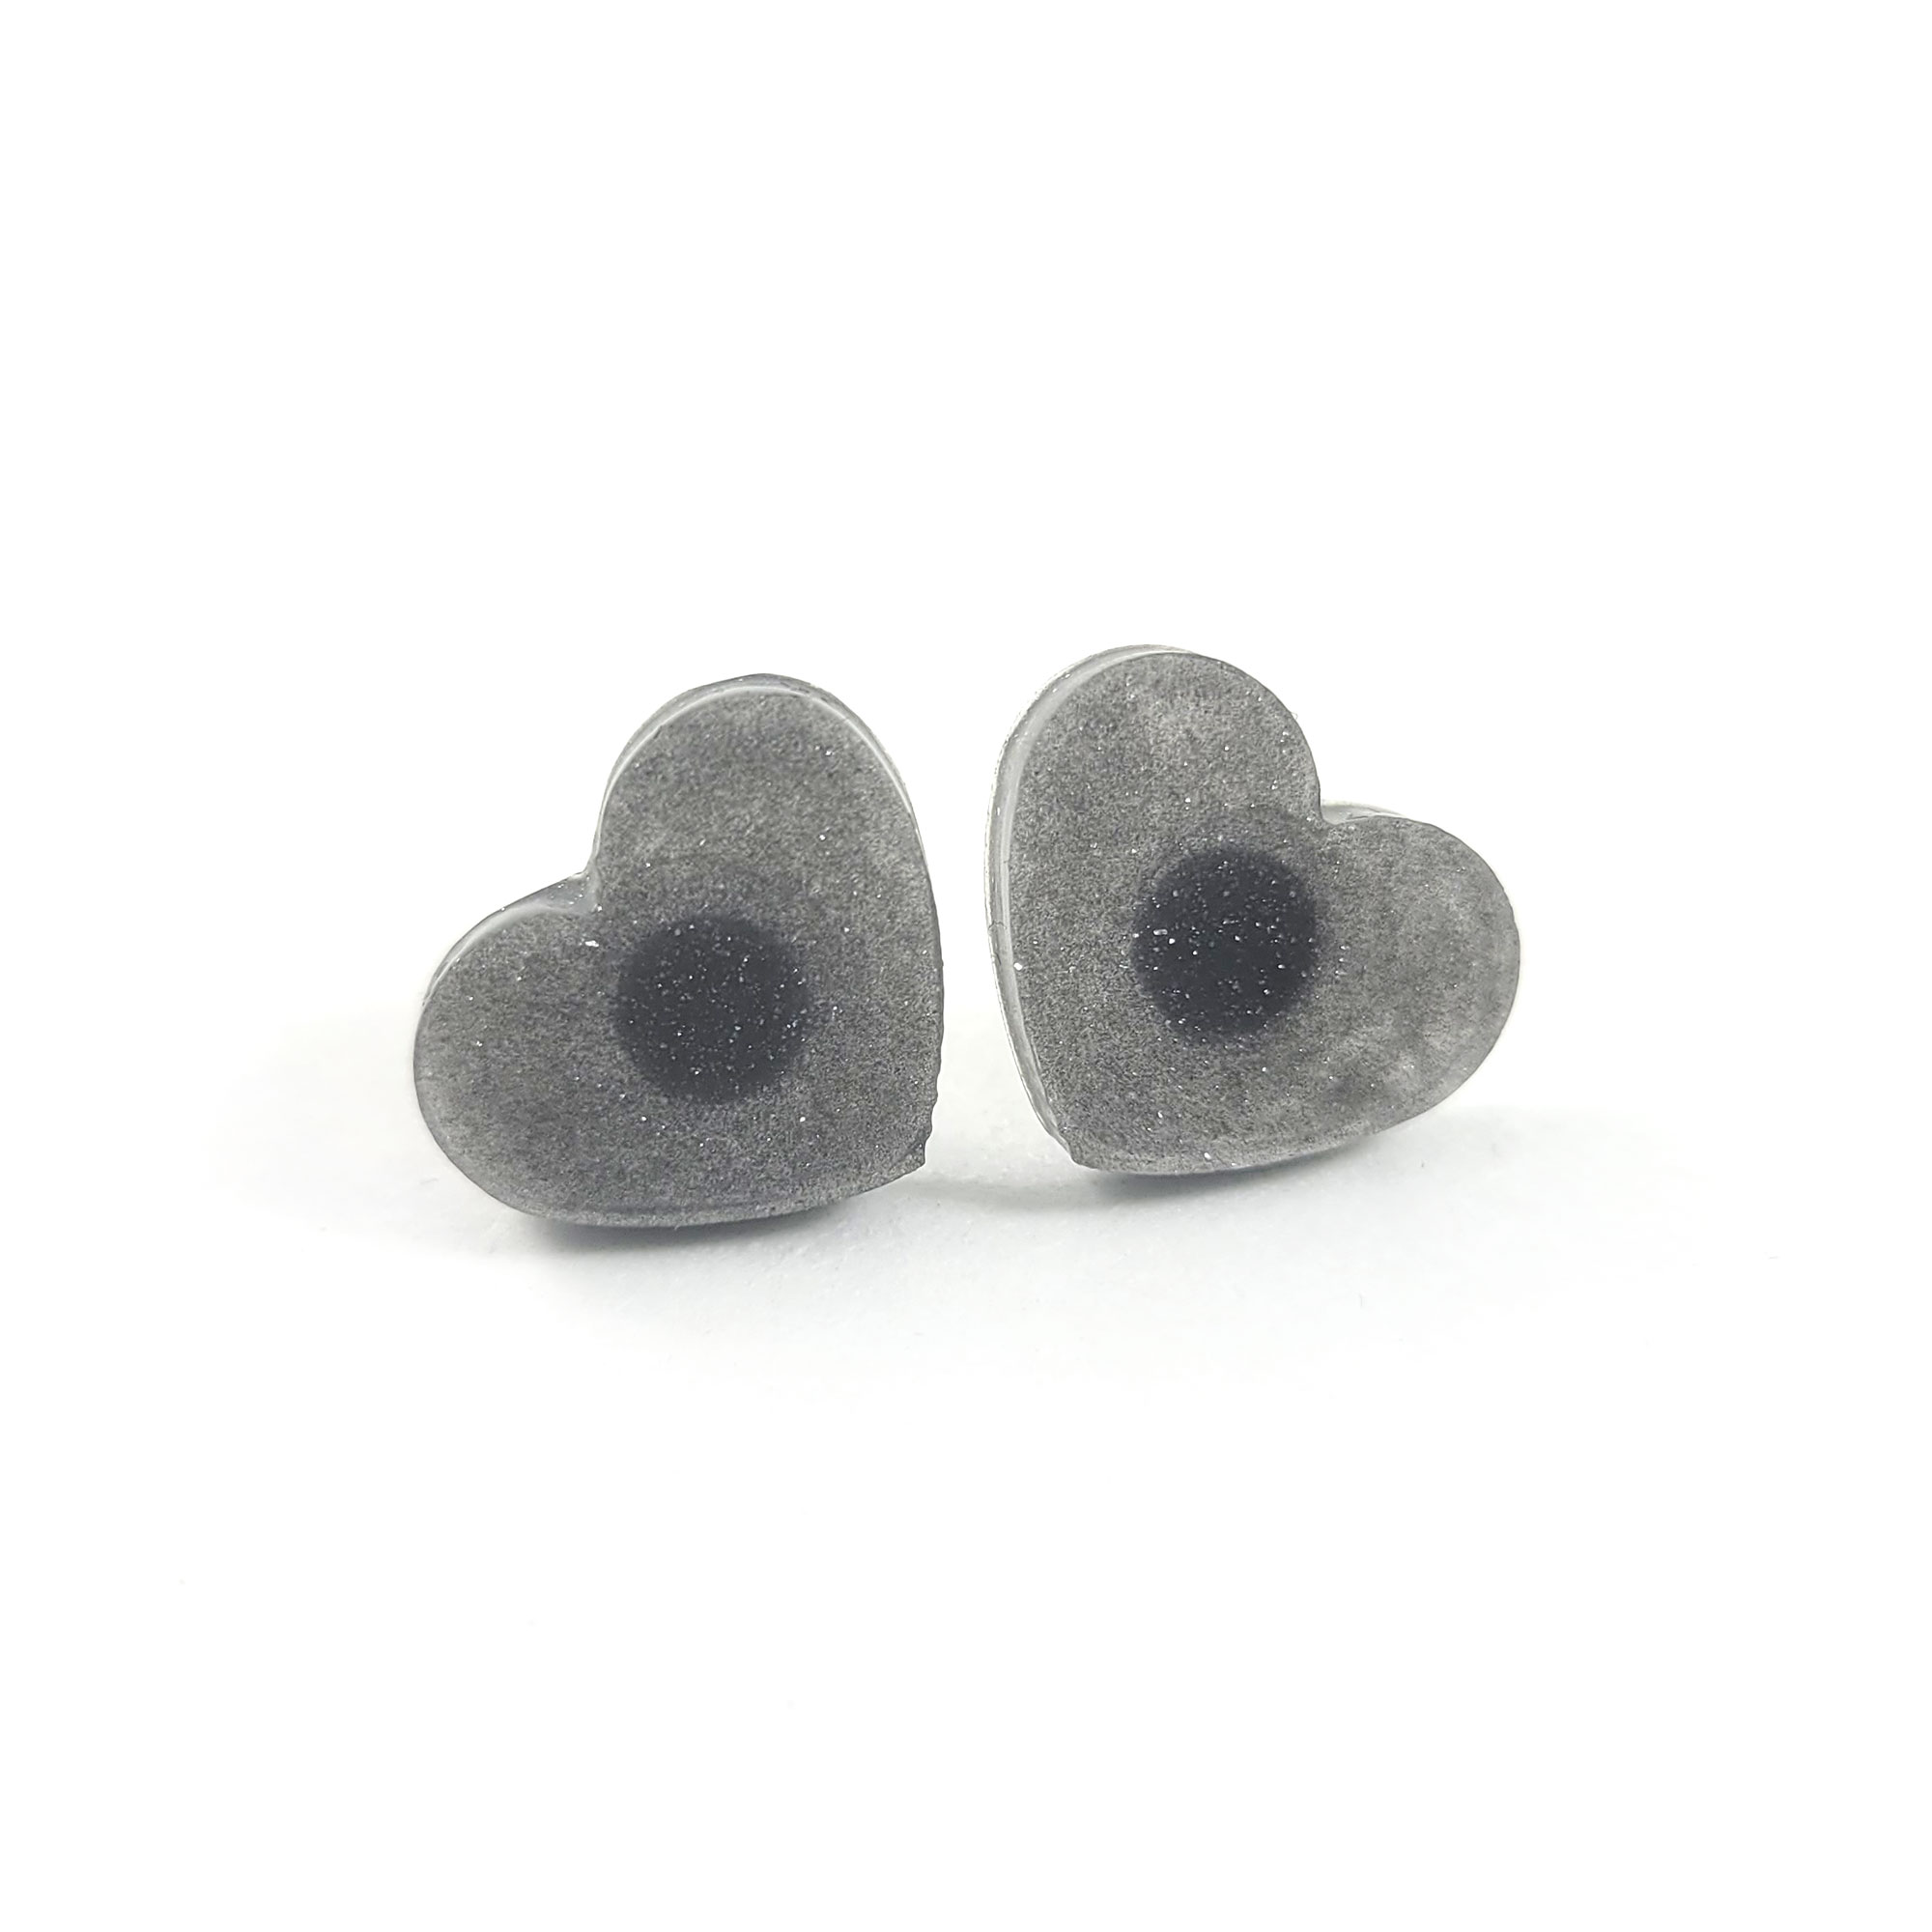 Show Some Love Heart Earrings by Wilde Designs